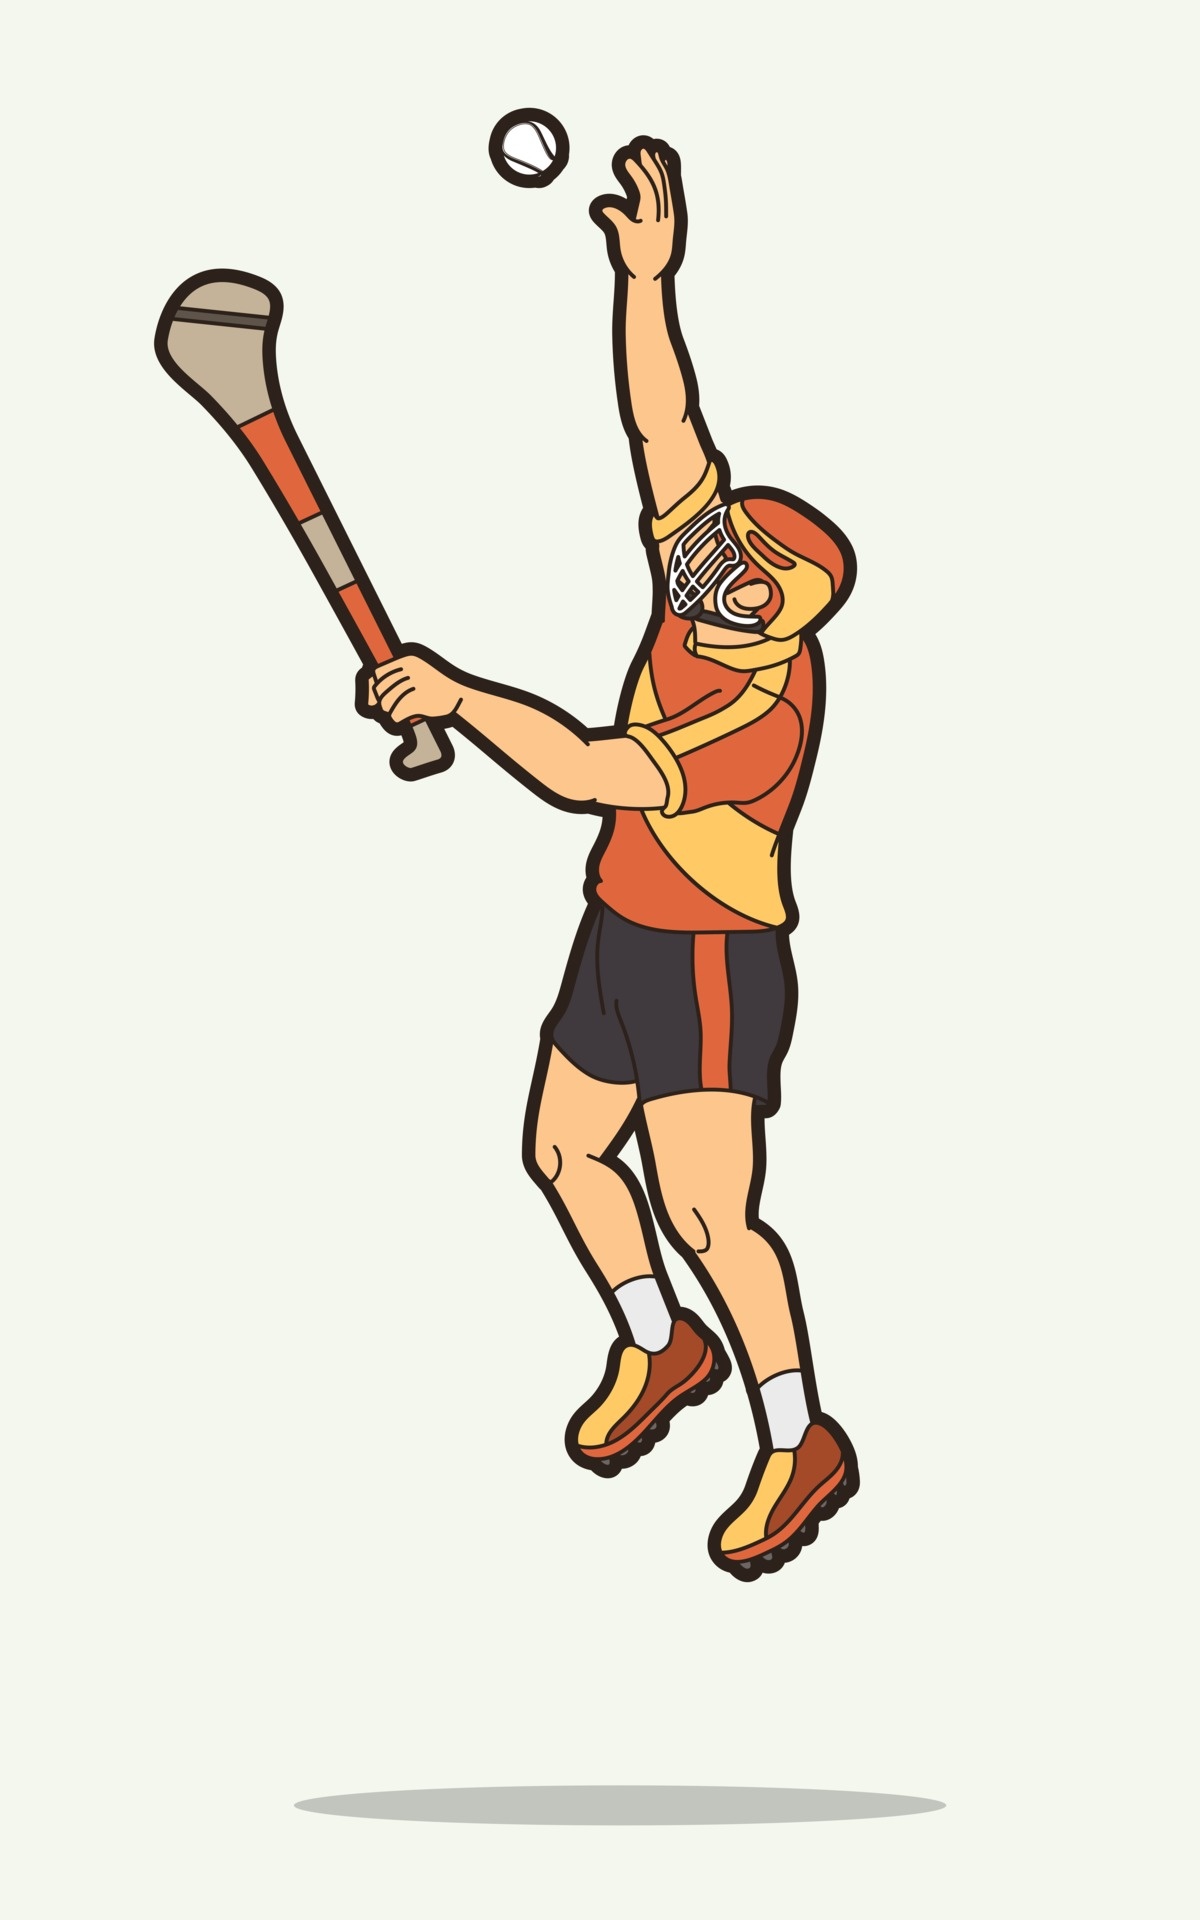 Hurling: A hurler tries to catch a ball, Minimalistic fan art. 1200x1920 HD Wallpaper.